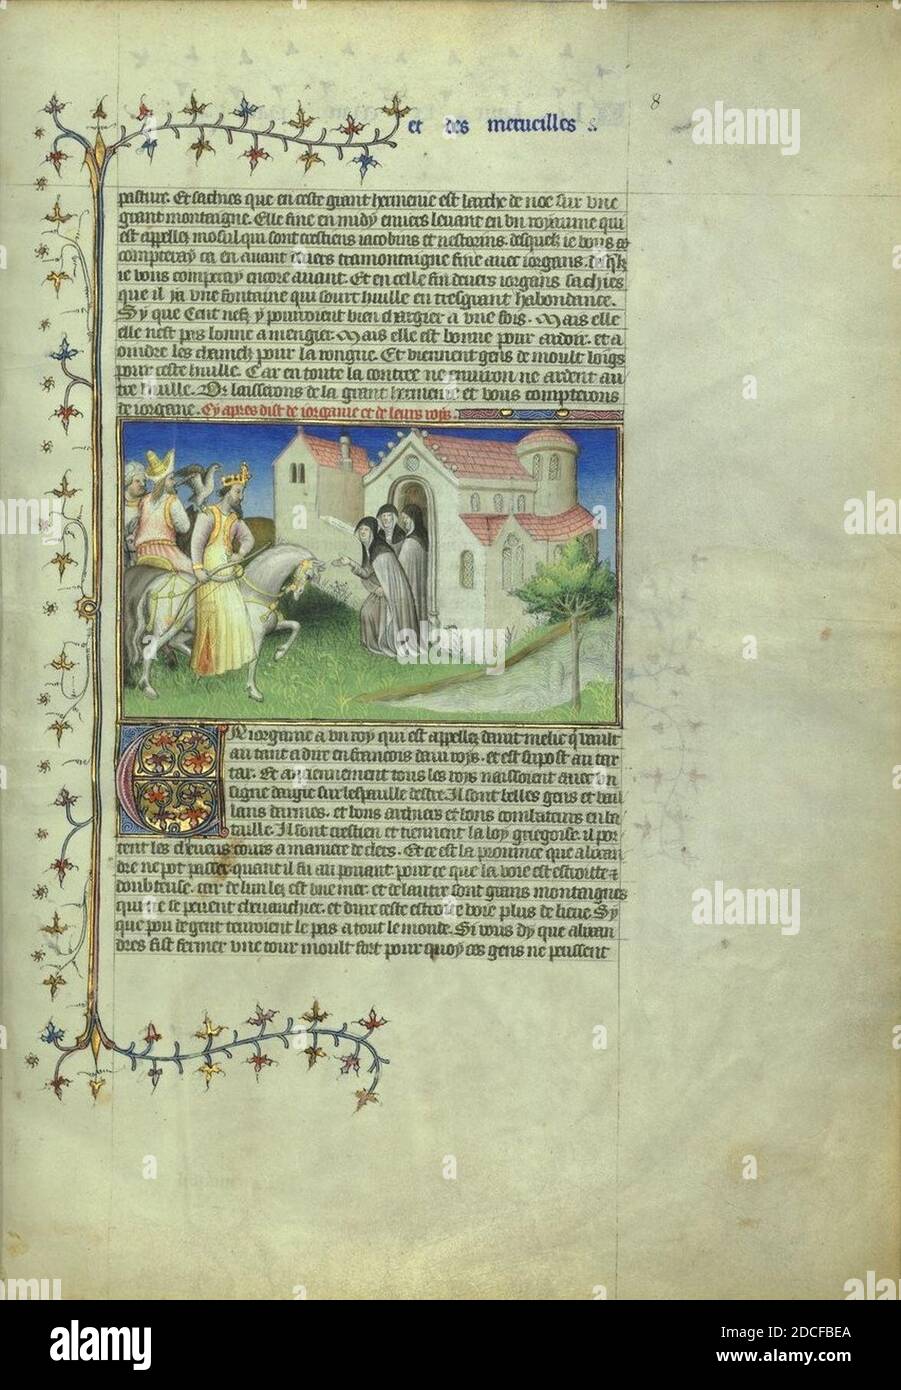 Rey David VII de Georgia. Bibliotheque Nationale MS Fr. 2810 fol. 8r. Foto de stock